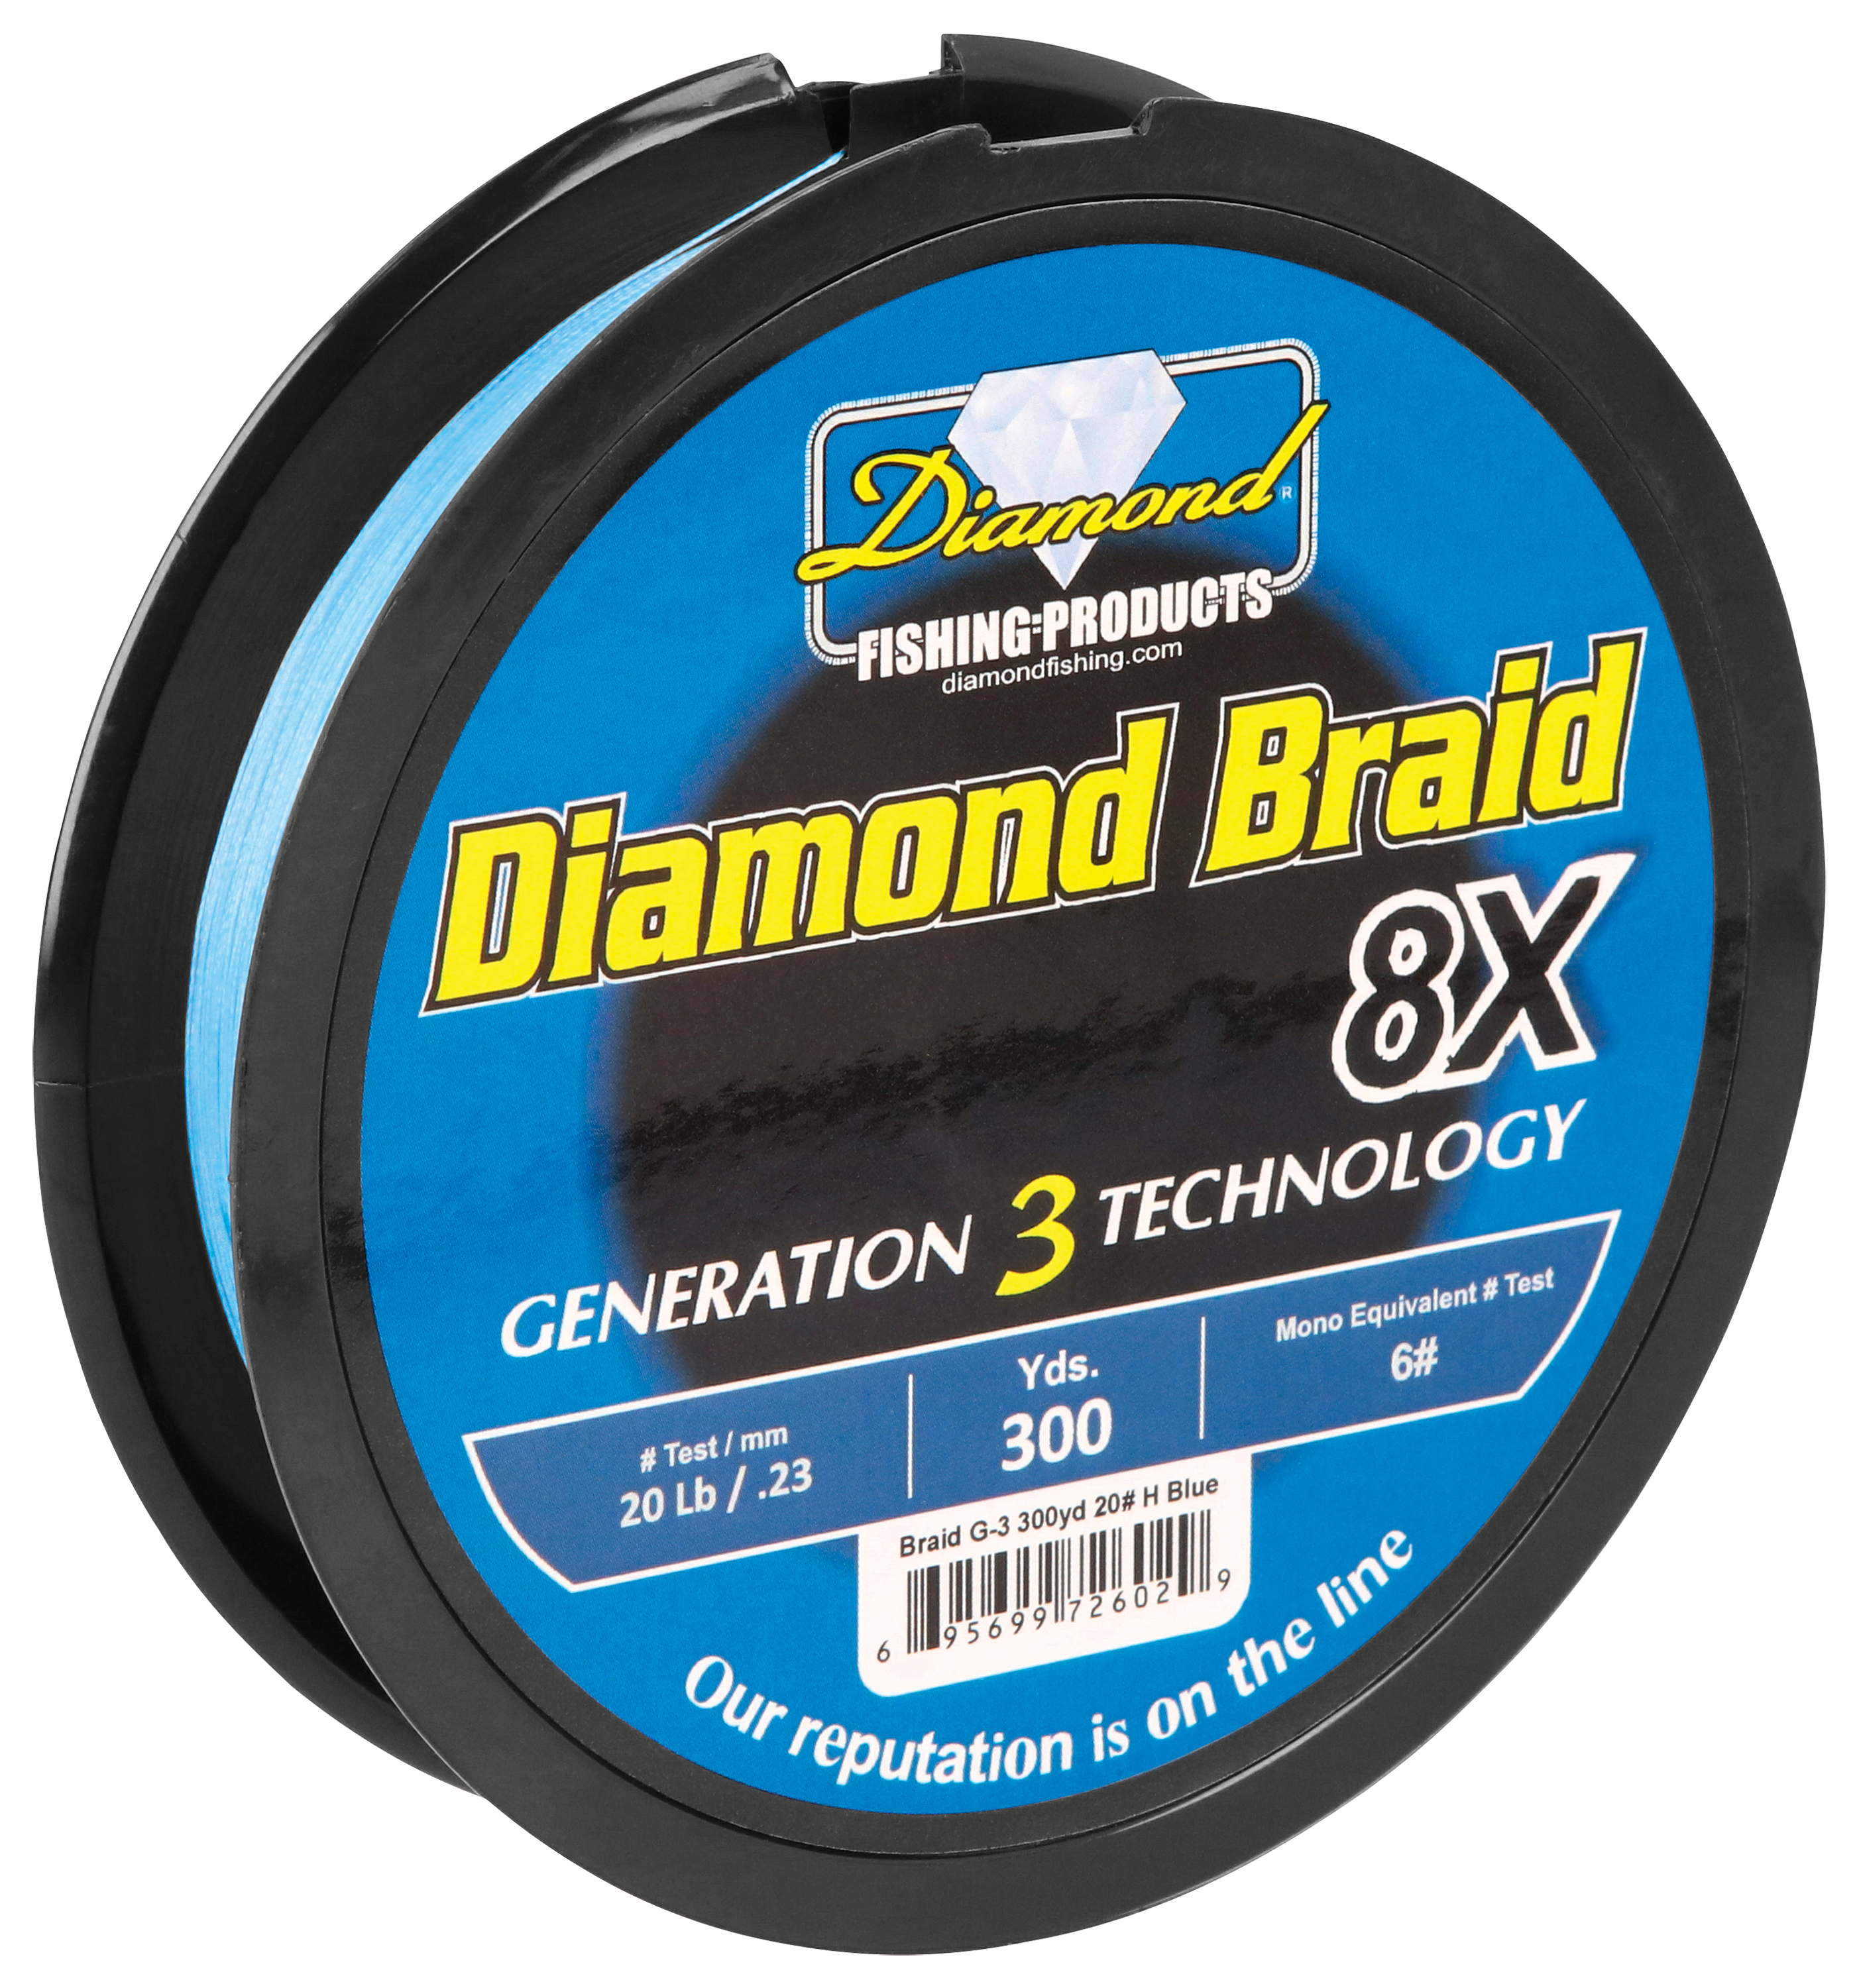 Diamond 8x Generation 3 Yard Line Jigging Braid 300yd 20lb